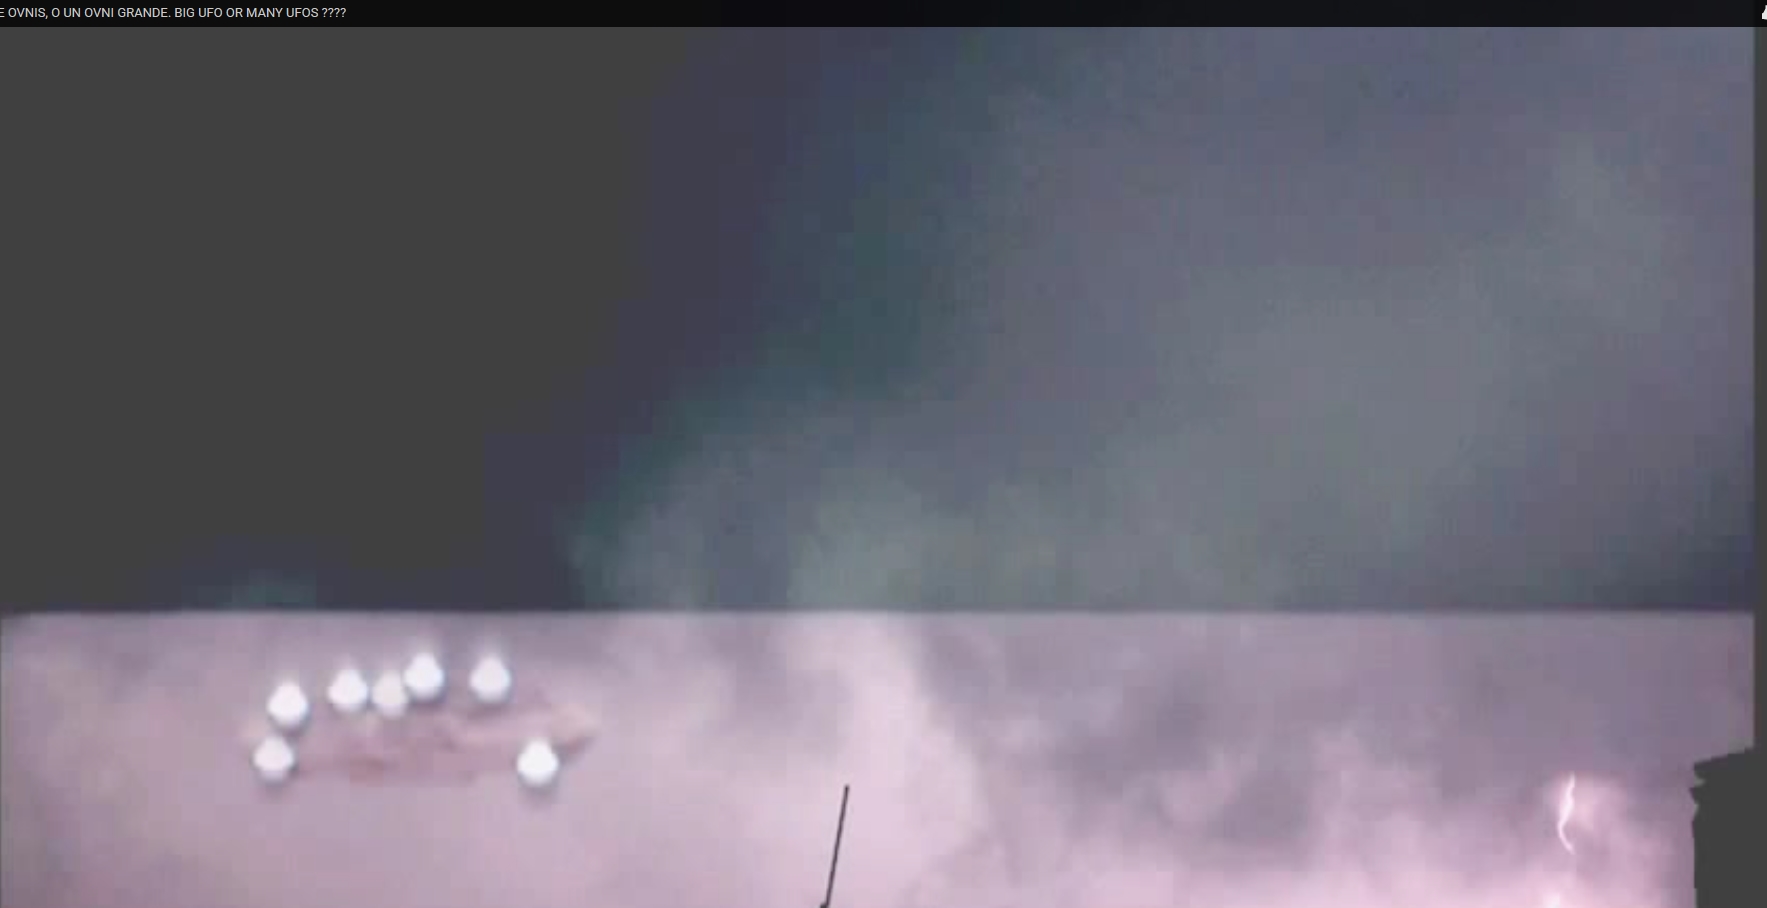 Strange formation of lights captured in Mexico. UFO?